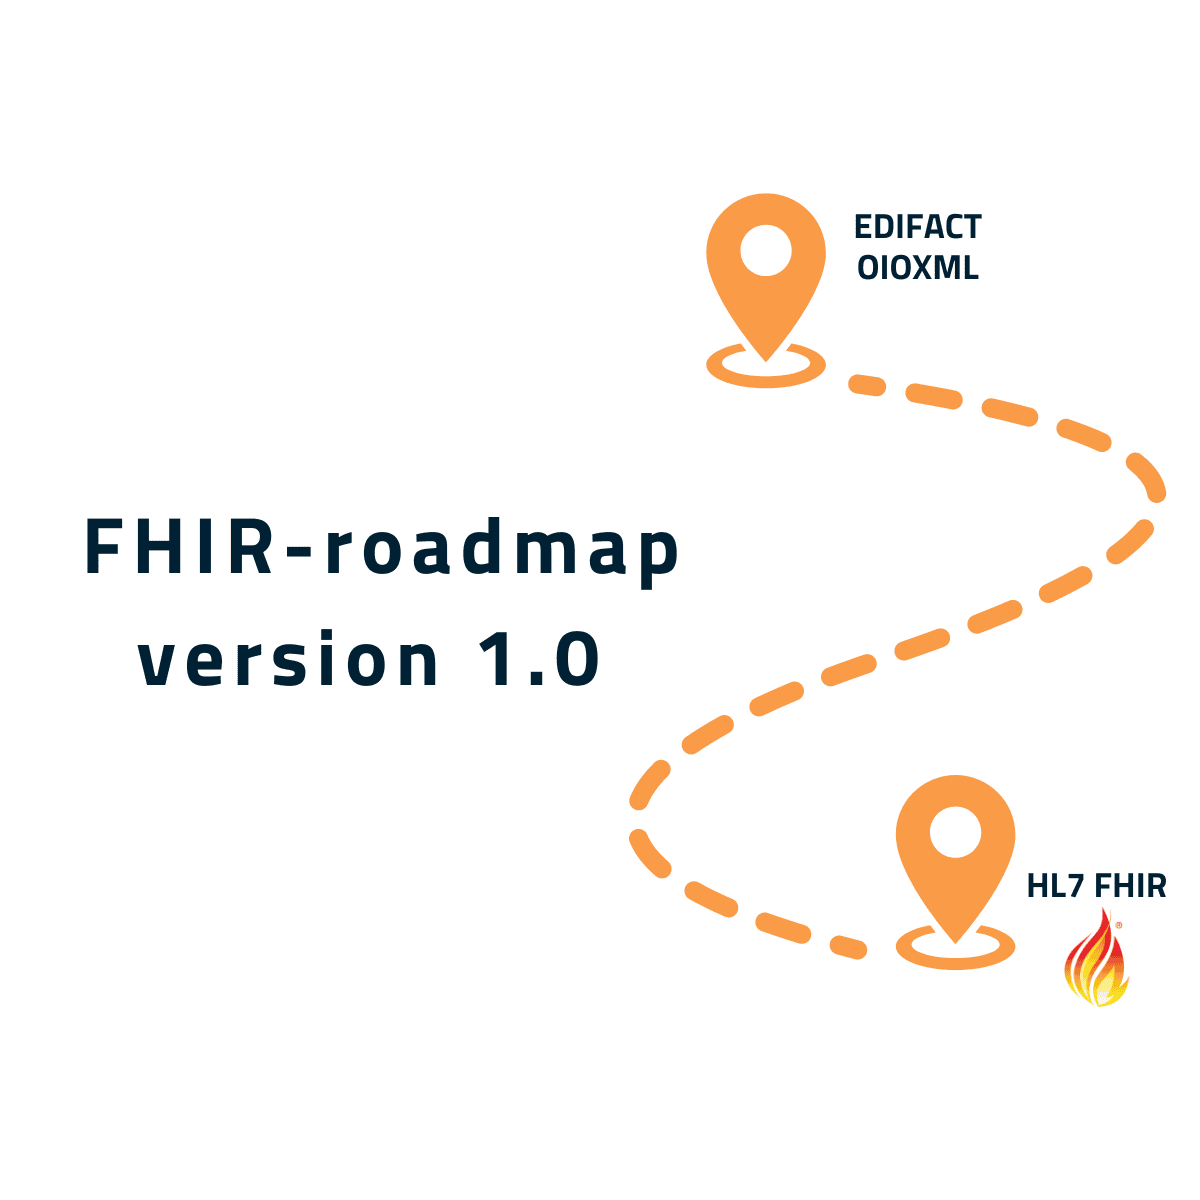 To lokationer: 1) Fra EDIFACT og OIOXML til 2) HL7 FHIR. Dertil tekst: "FHIR-roadmap version 1.0."